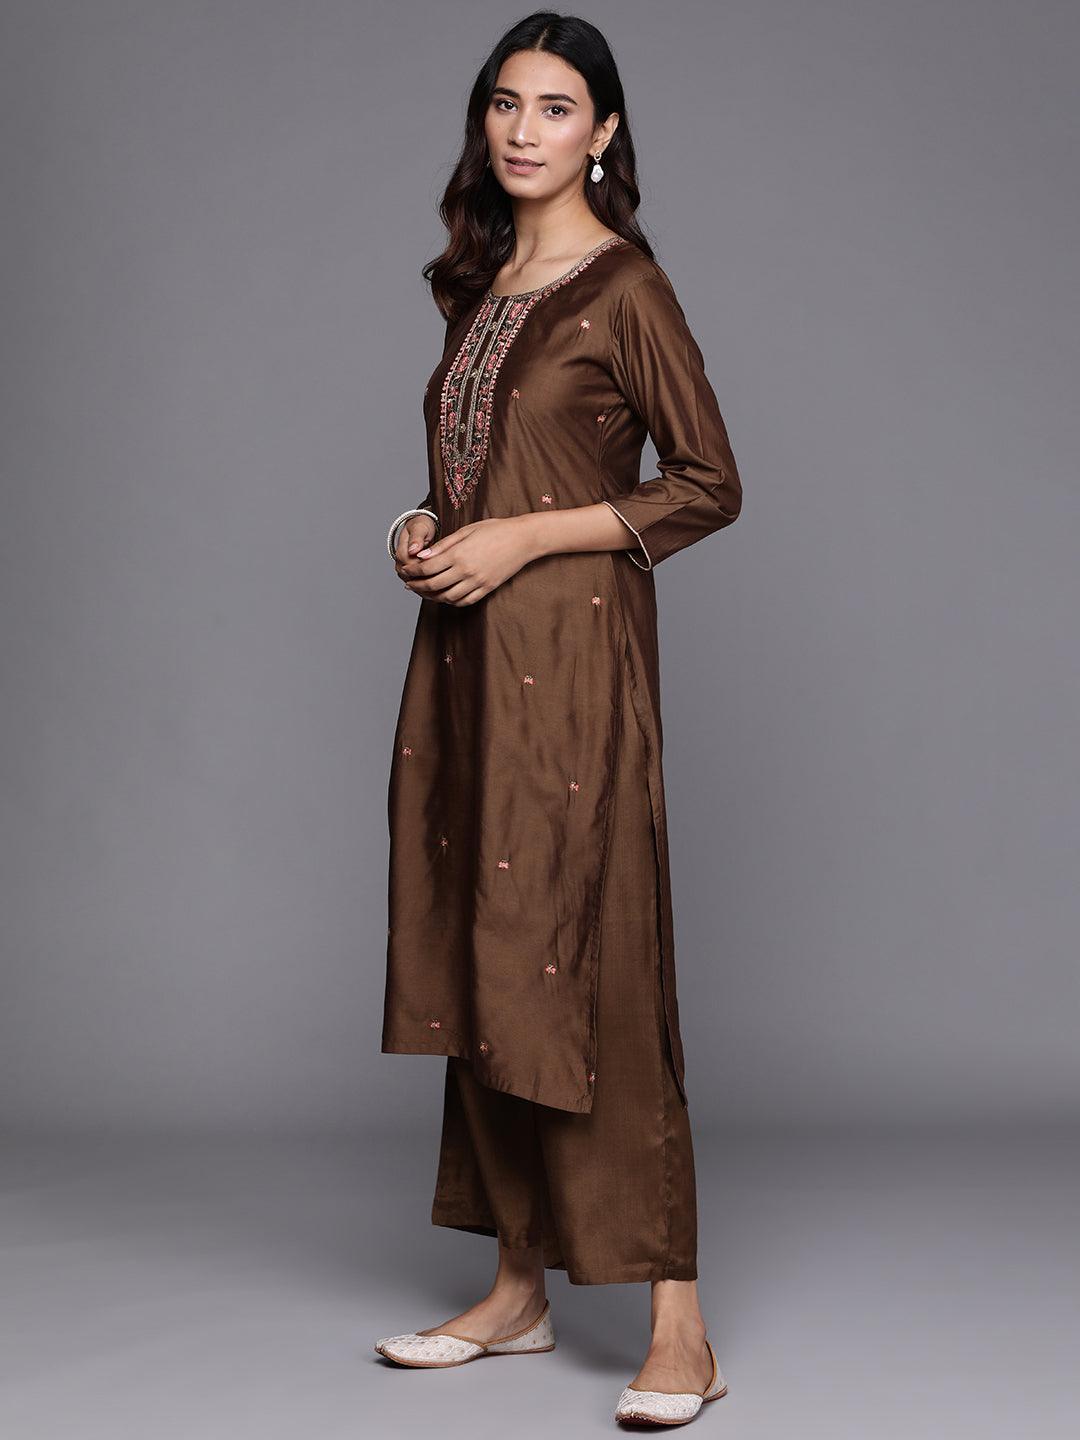 Brown Embroidered Chanderi Silk Suit Set - Libas